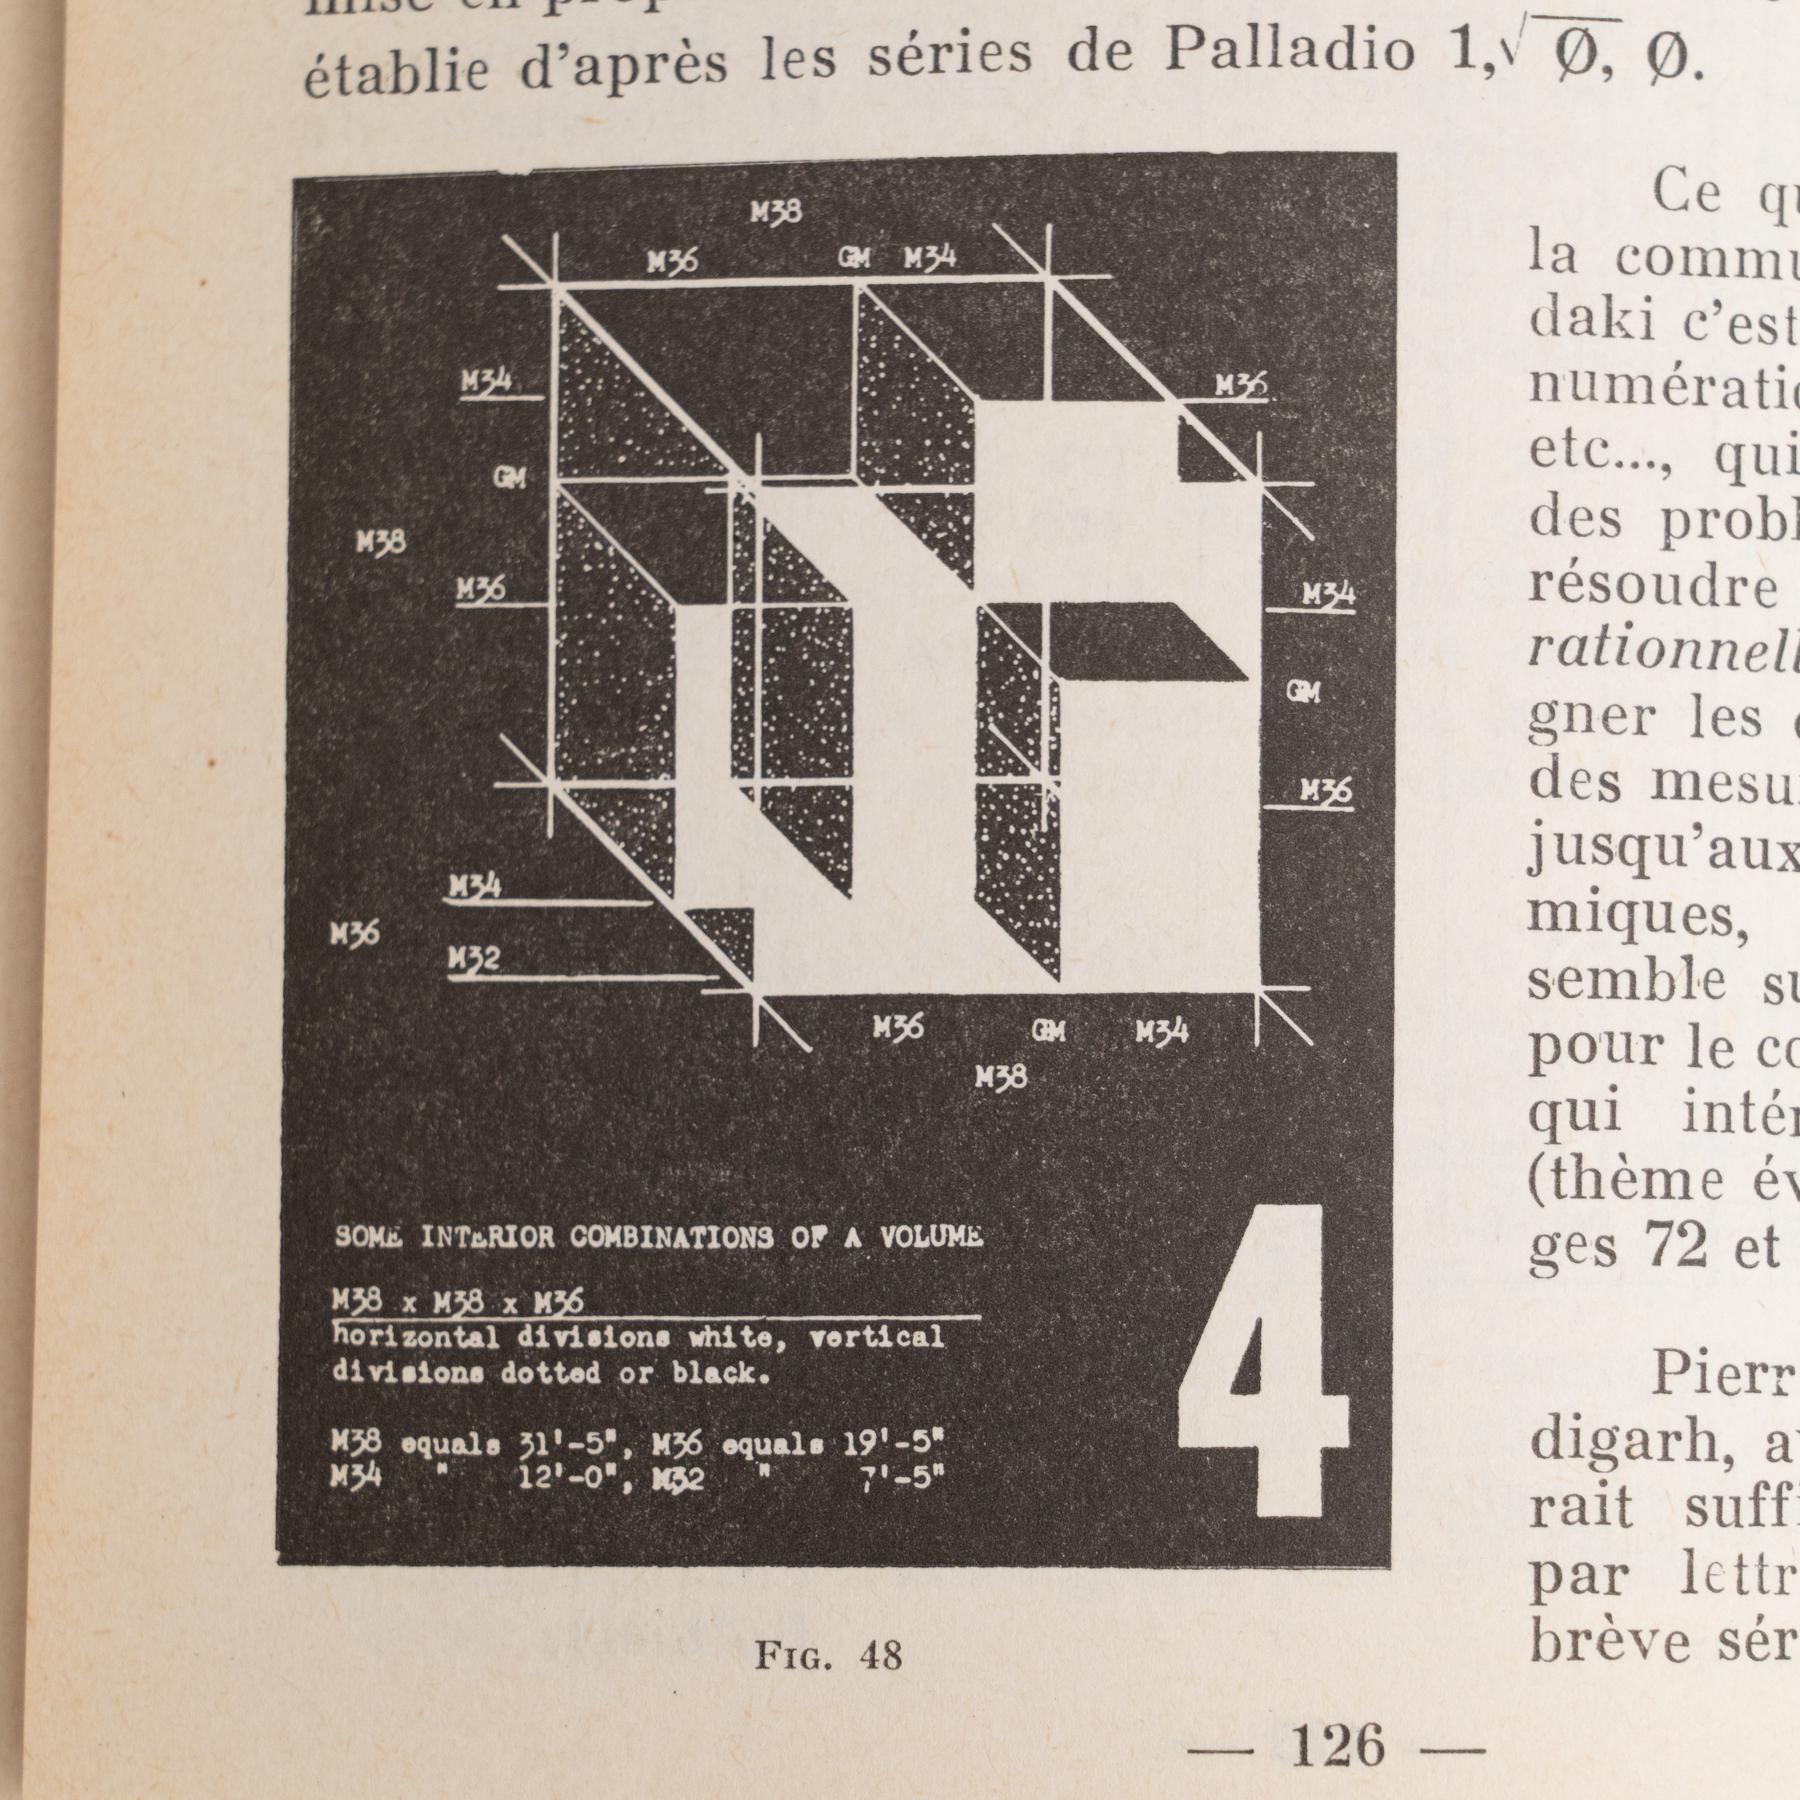 Le Corbusier Der Modulor 2 Book, 1955 For Sale 7